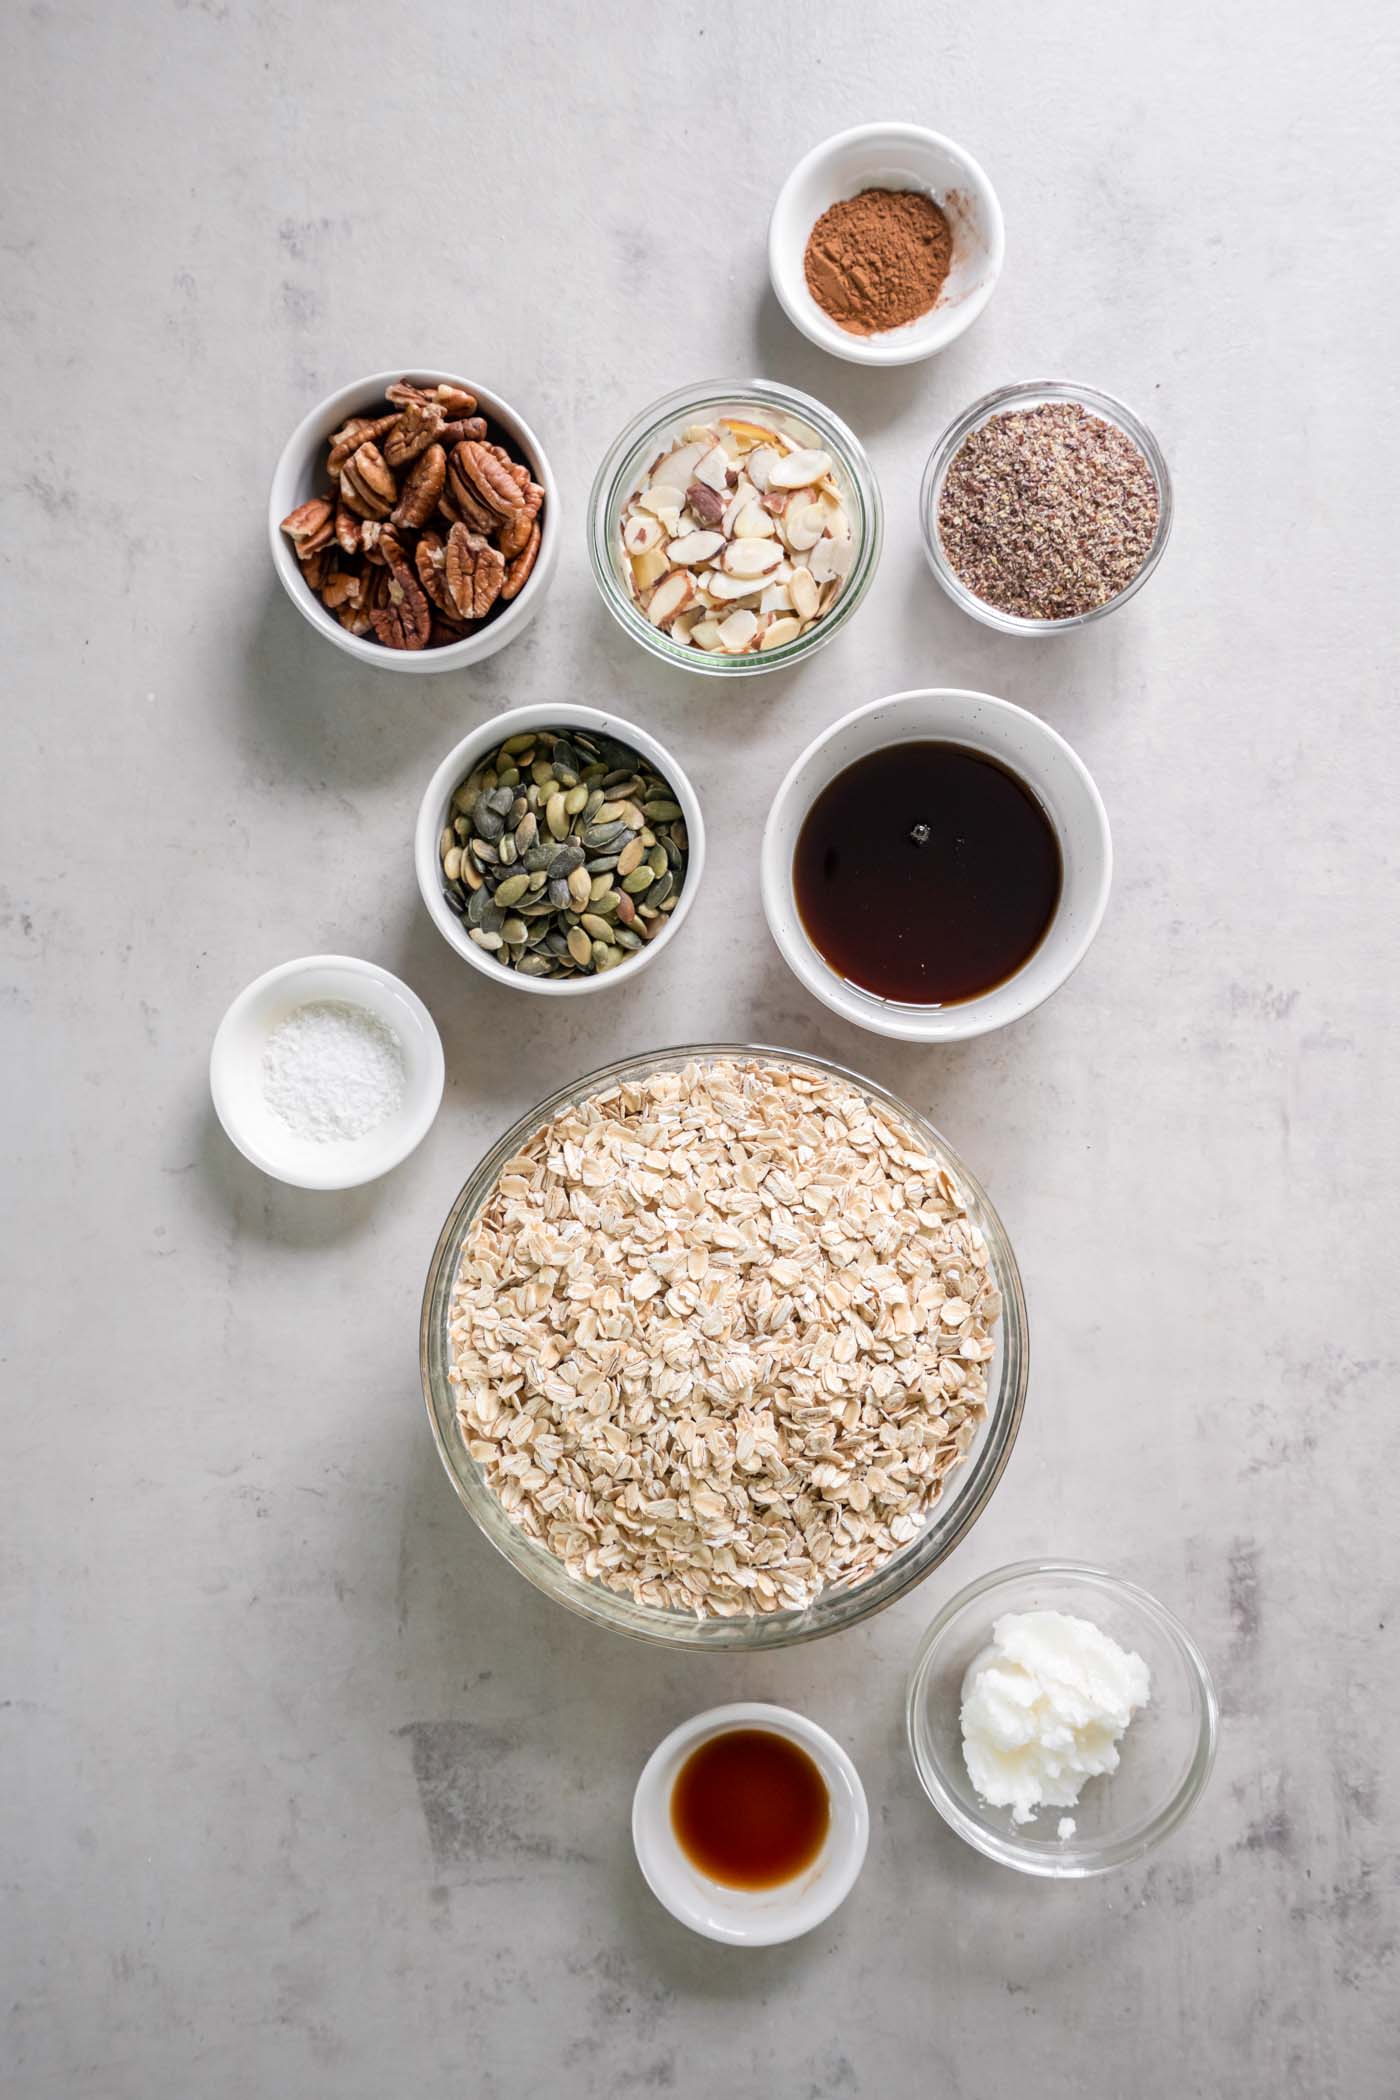 Ingredients for granola recipe.